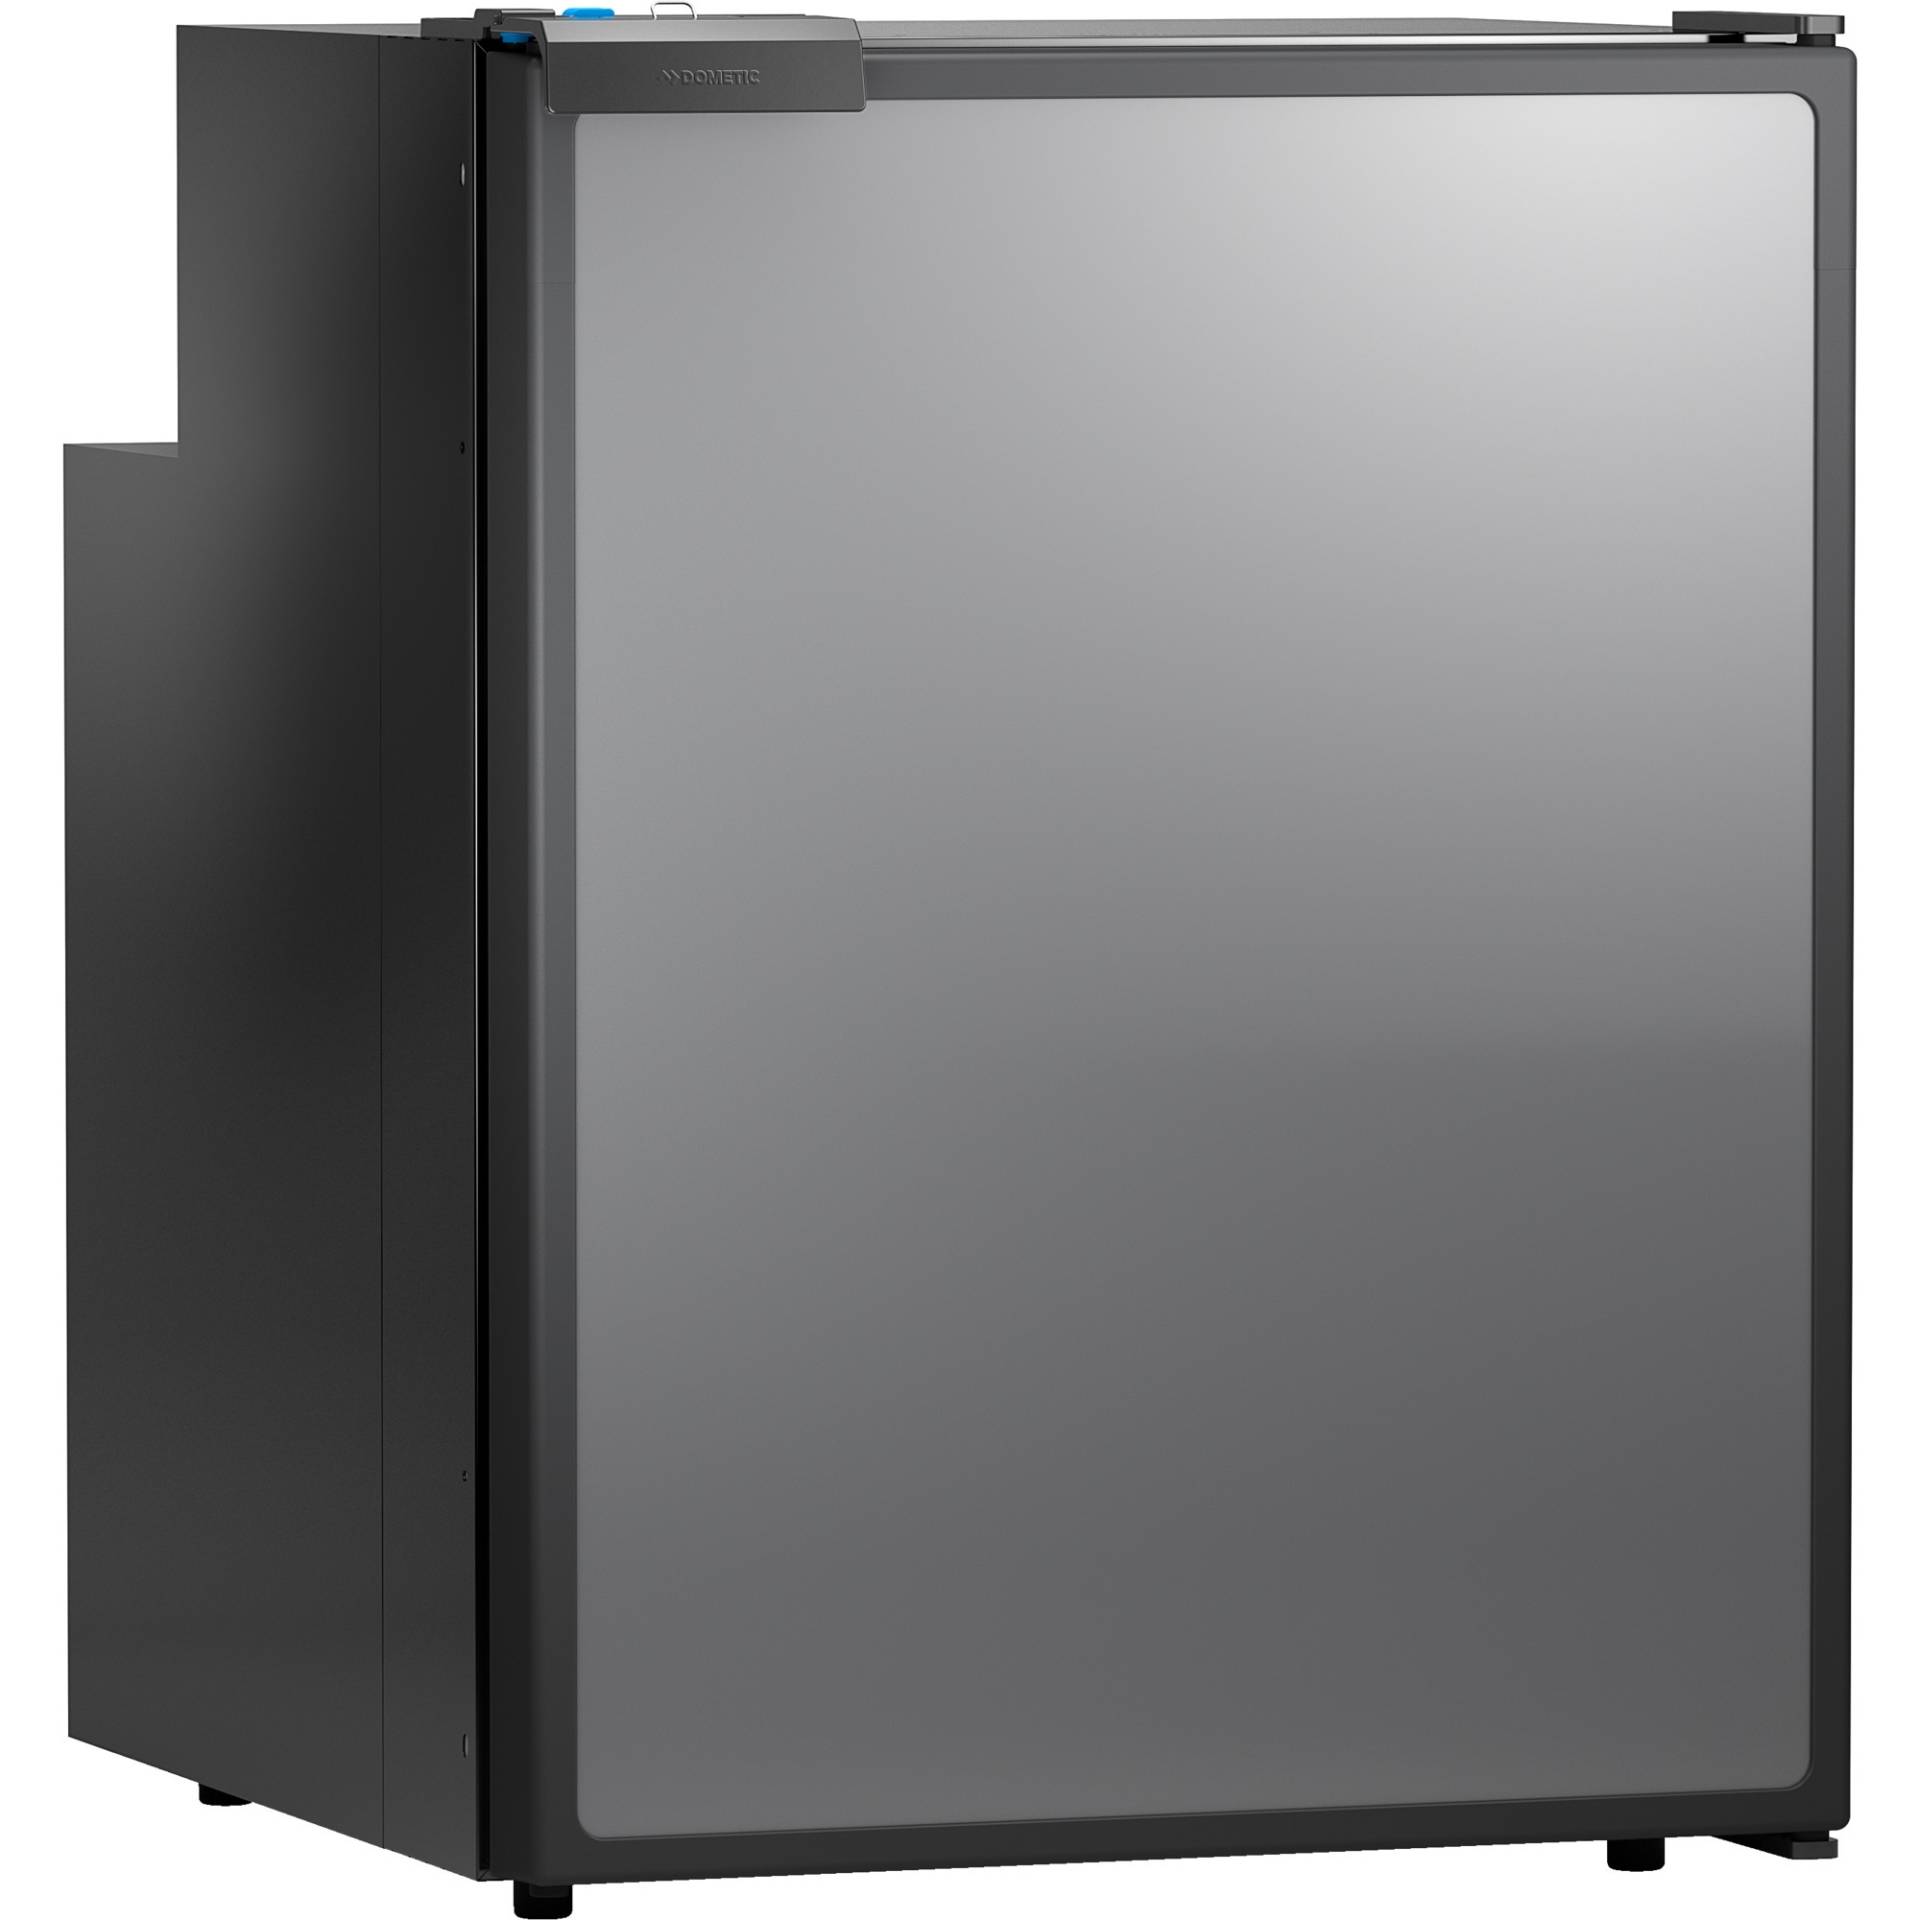 Coolmatic CRE 80, Kühlschrank von Dometic